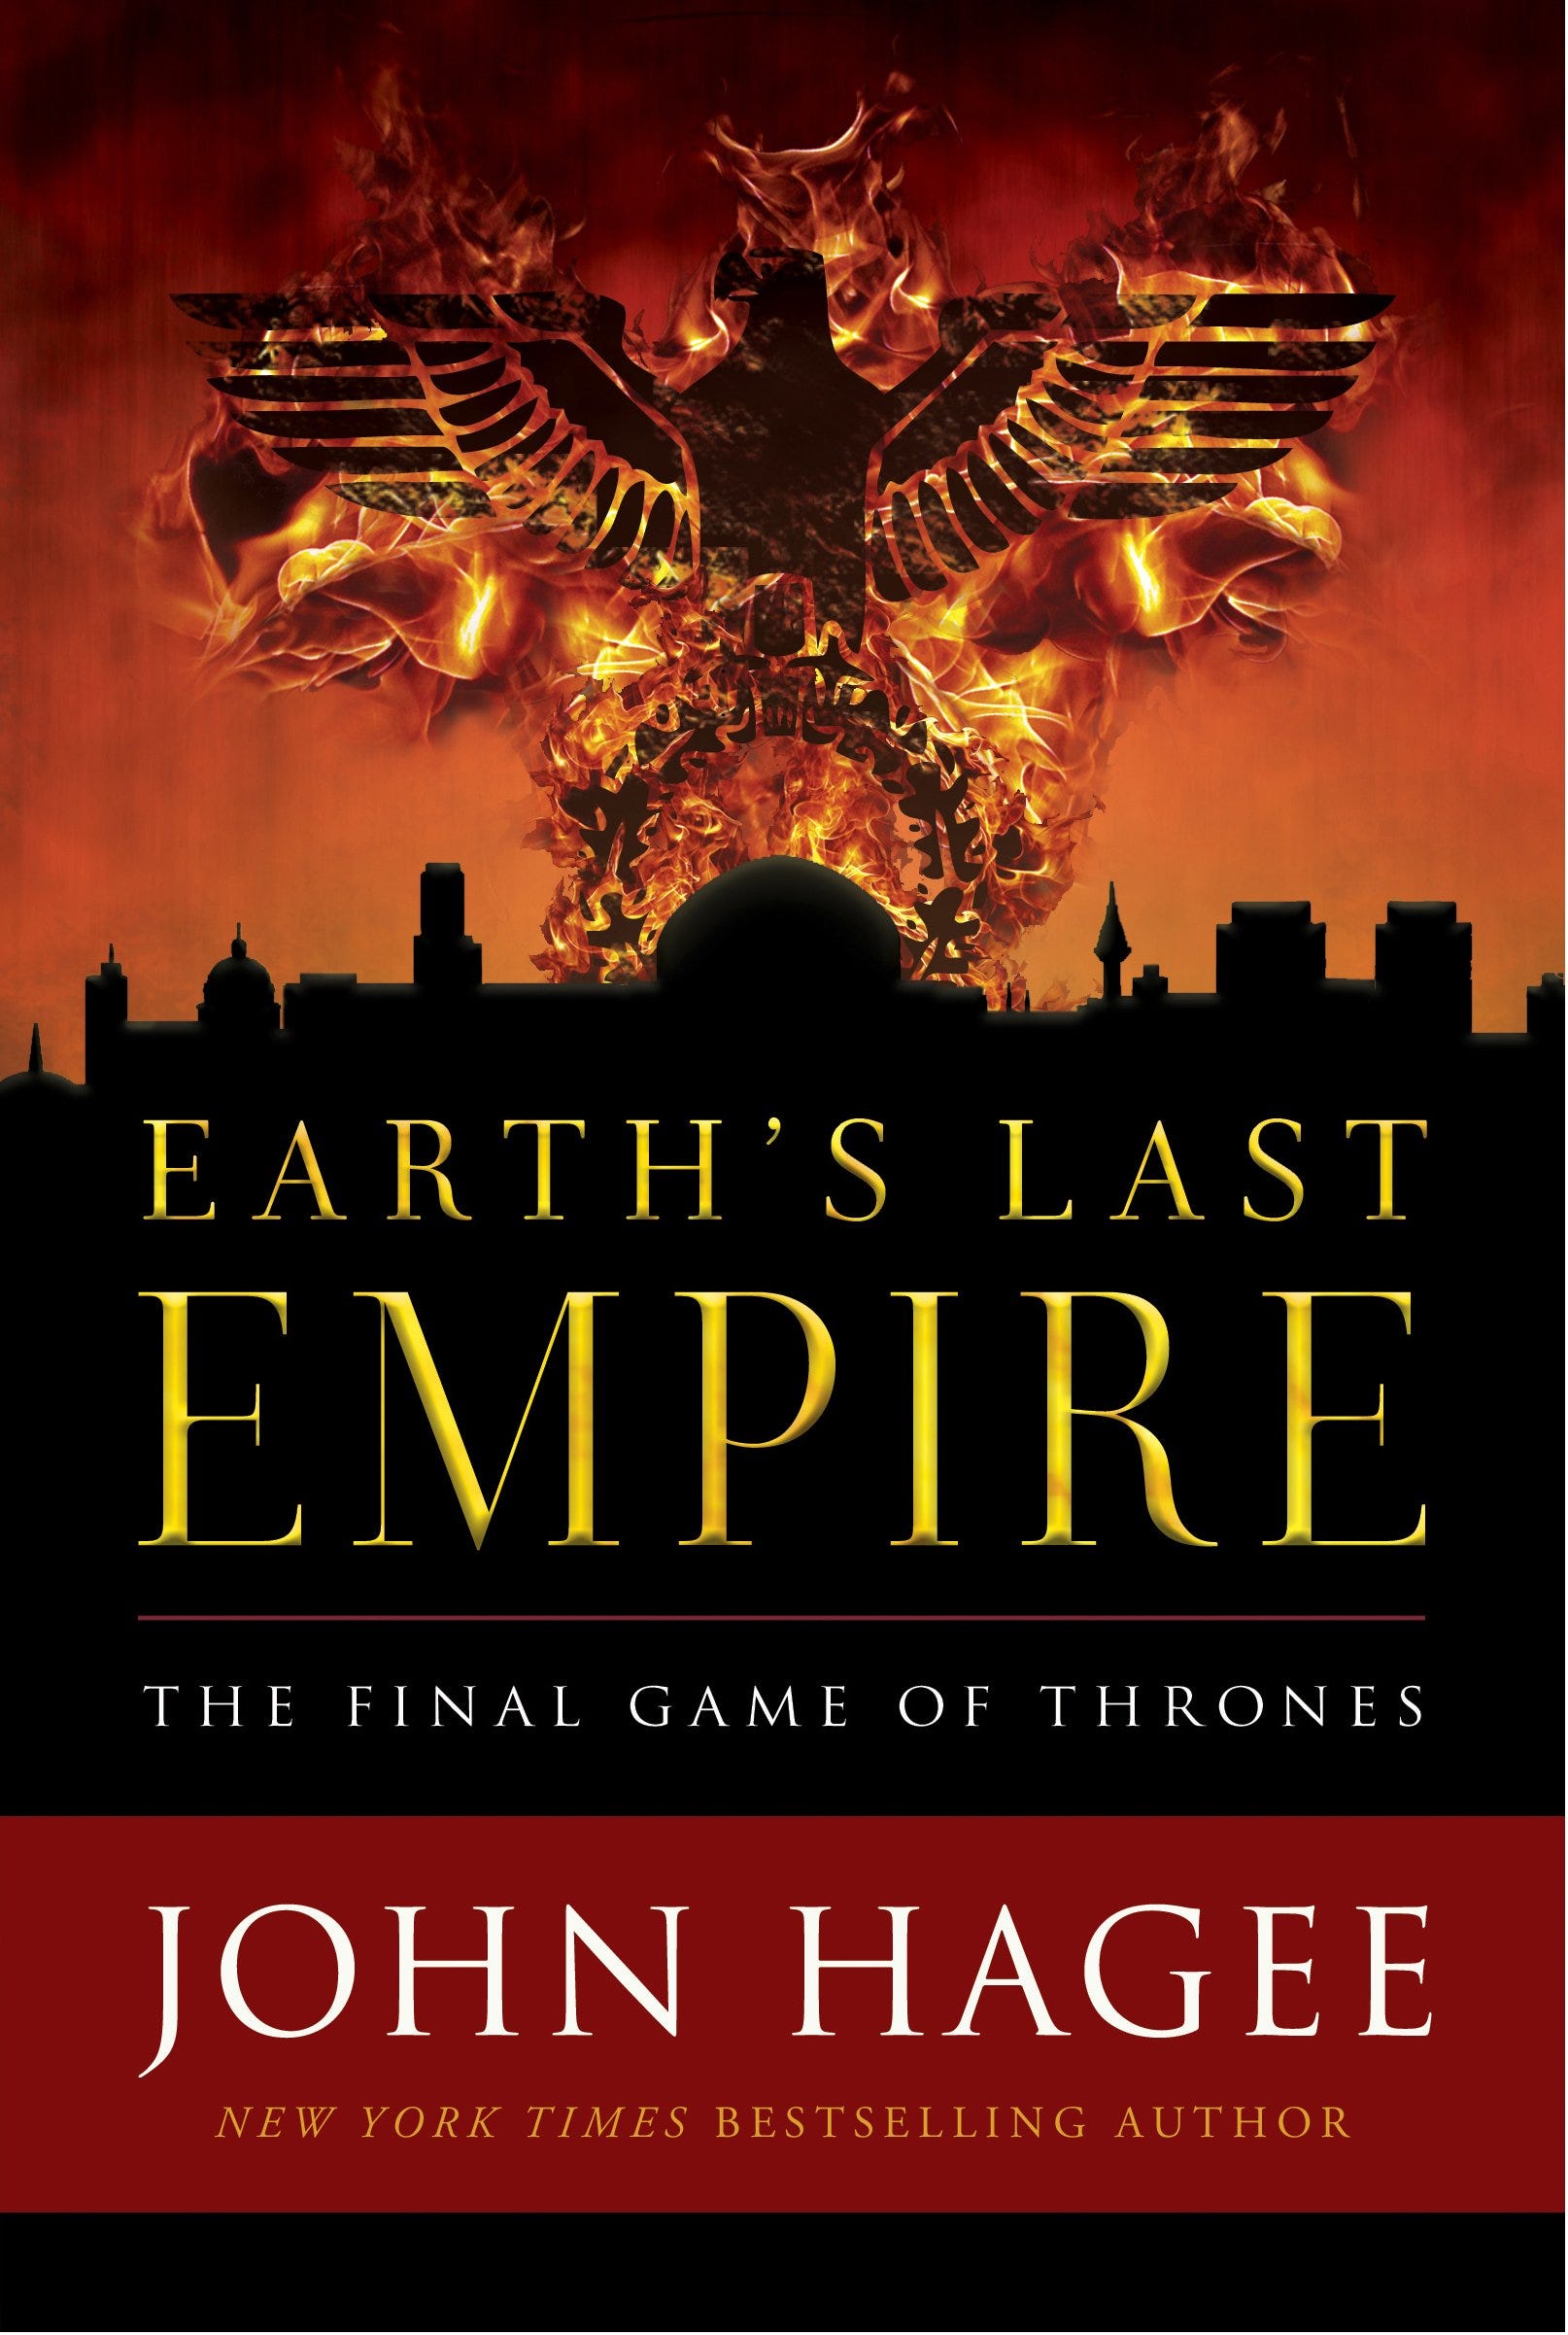 Pdf Download Ebooks Earth S Last Empire The Final Game Of Thrones John Hagee Full Pdf Free By Hstih Nov Medium